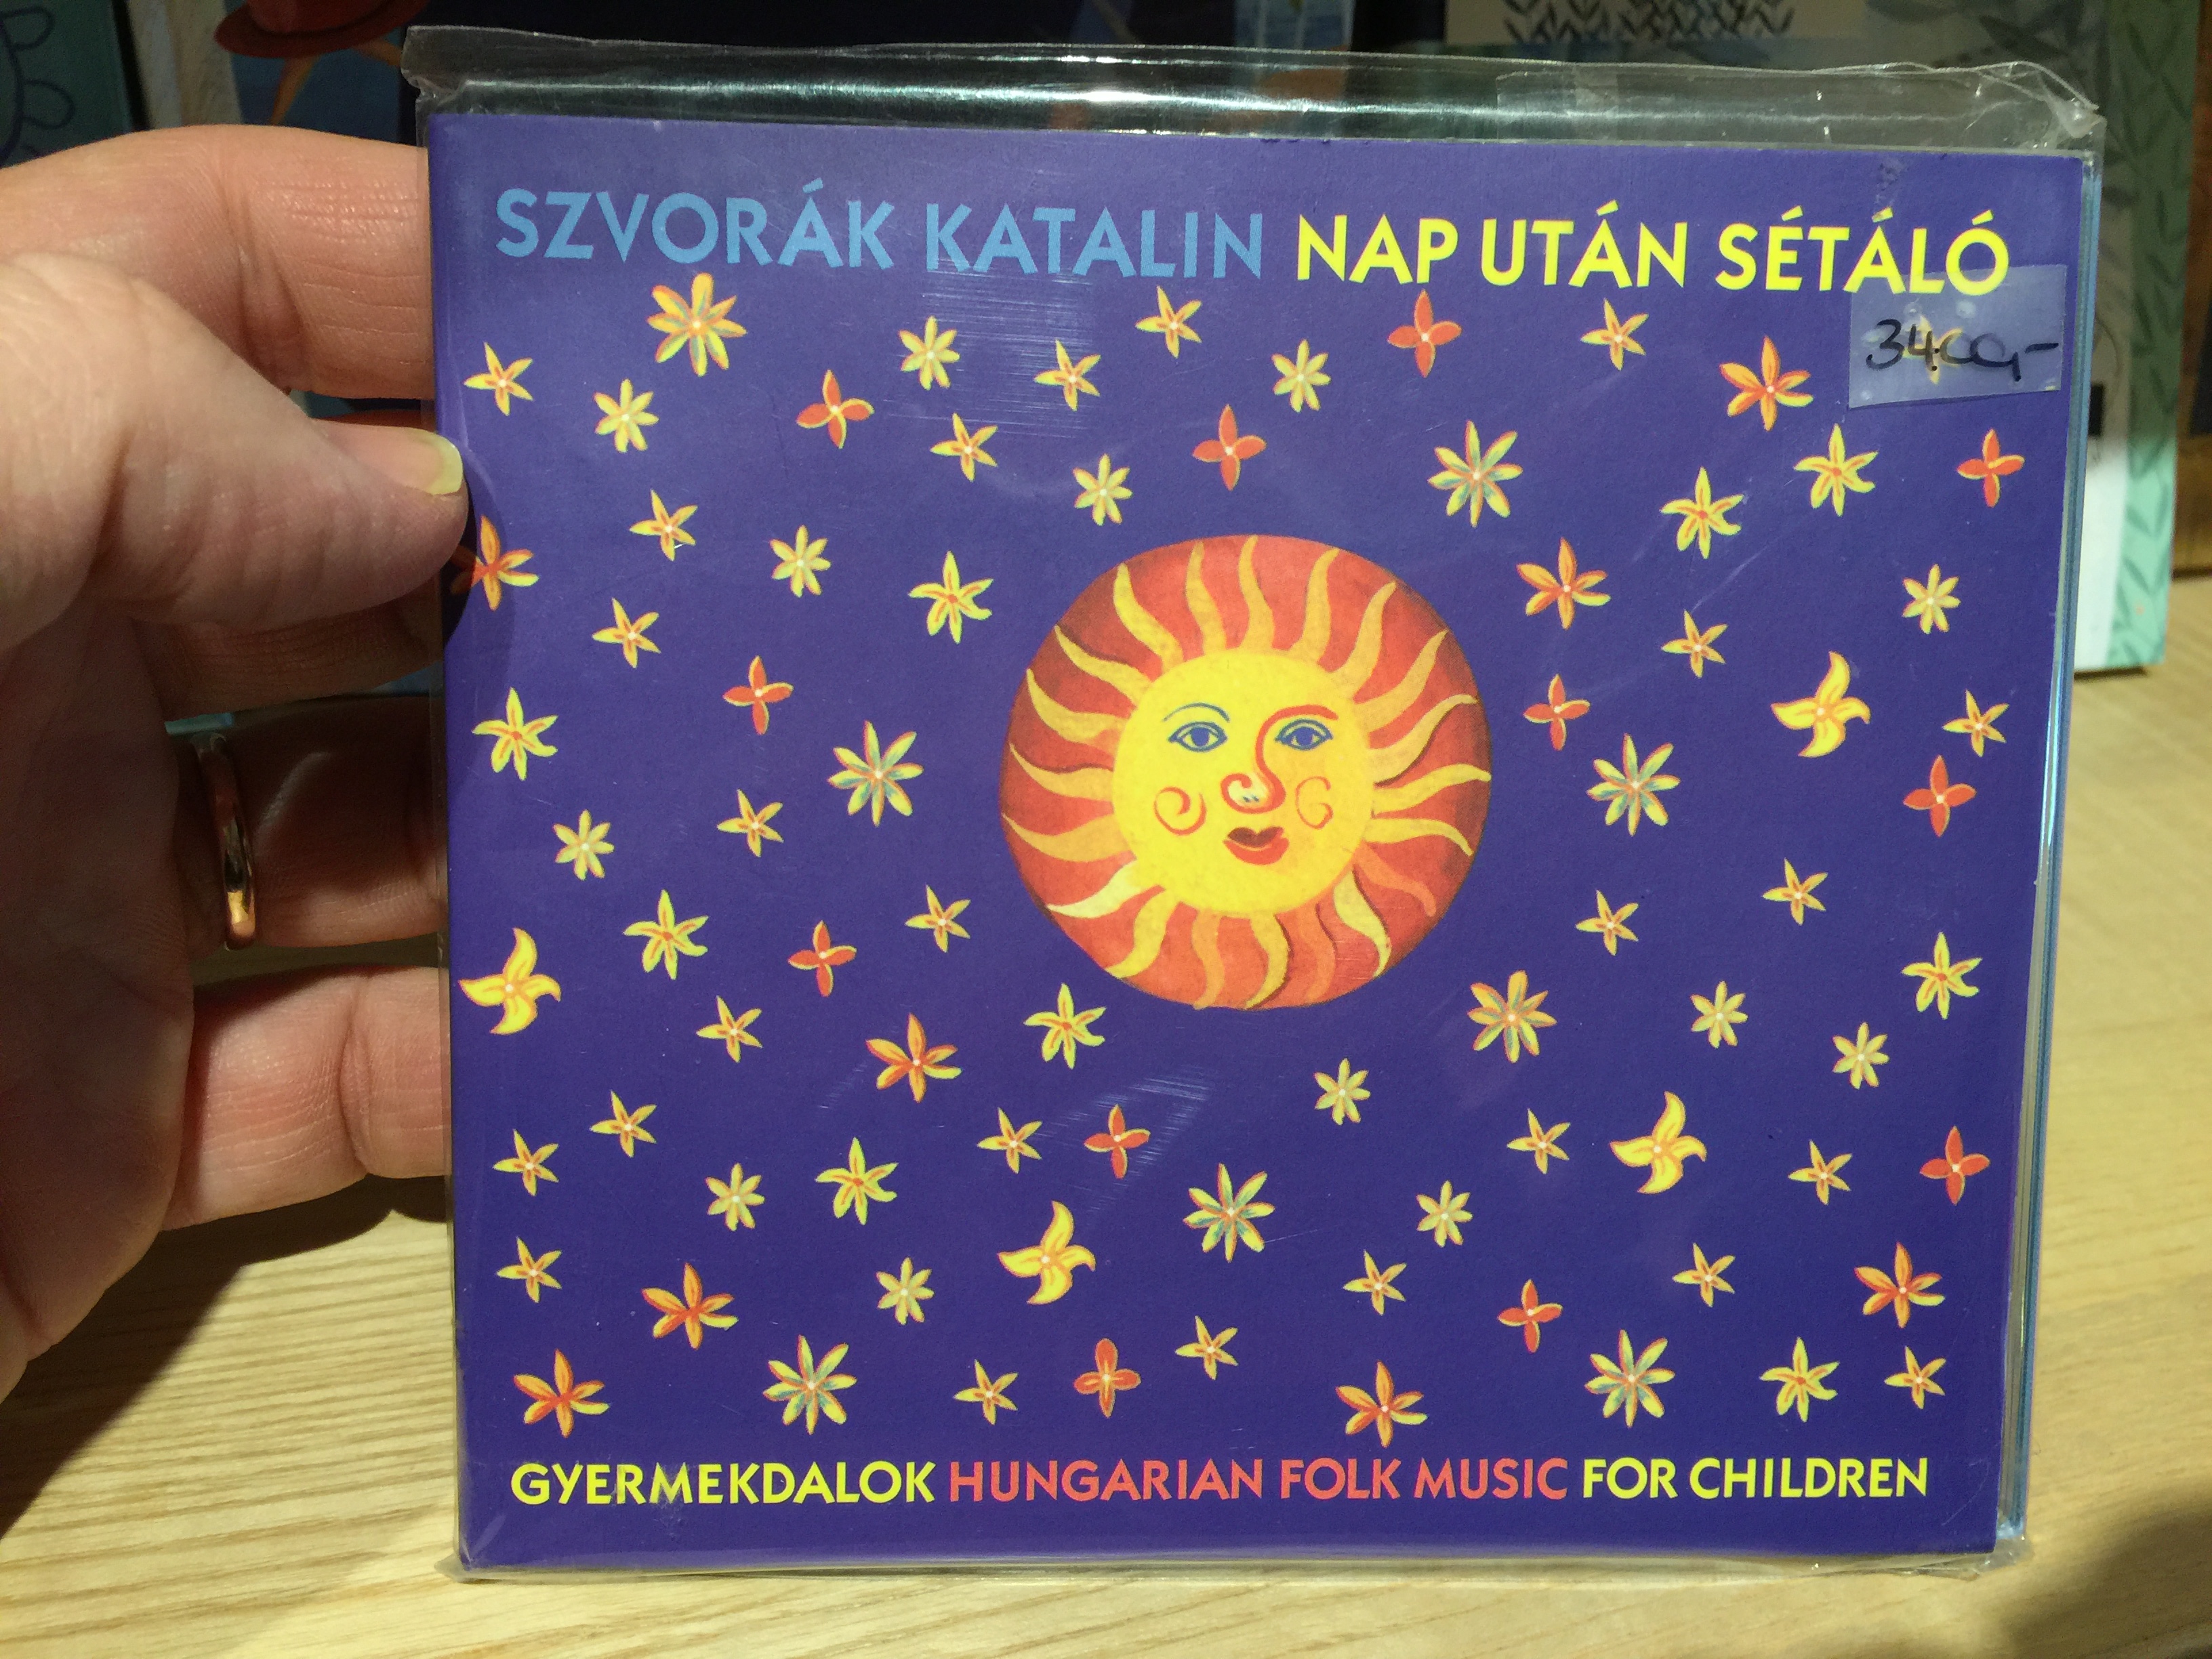 szvor-k-katalin-nap-ut-n-s-t-l-gyermekdalok-hungarian-folk-music-for-children-rep-audio-cd-2013-rep-029-1-.jpg